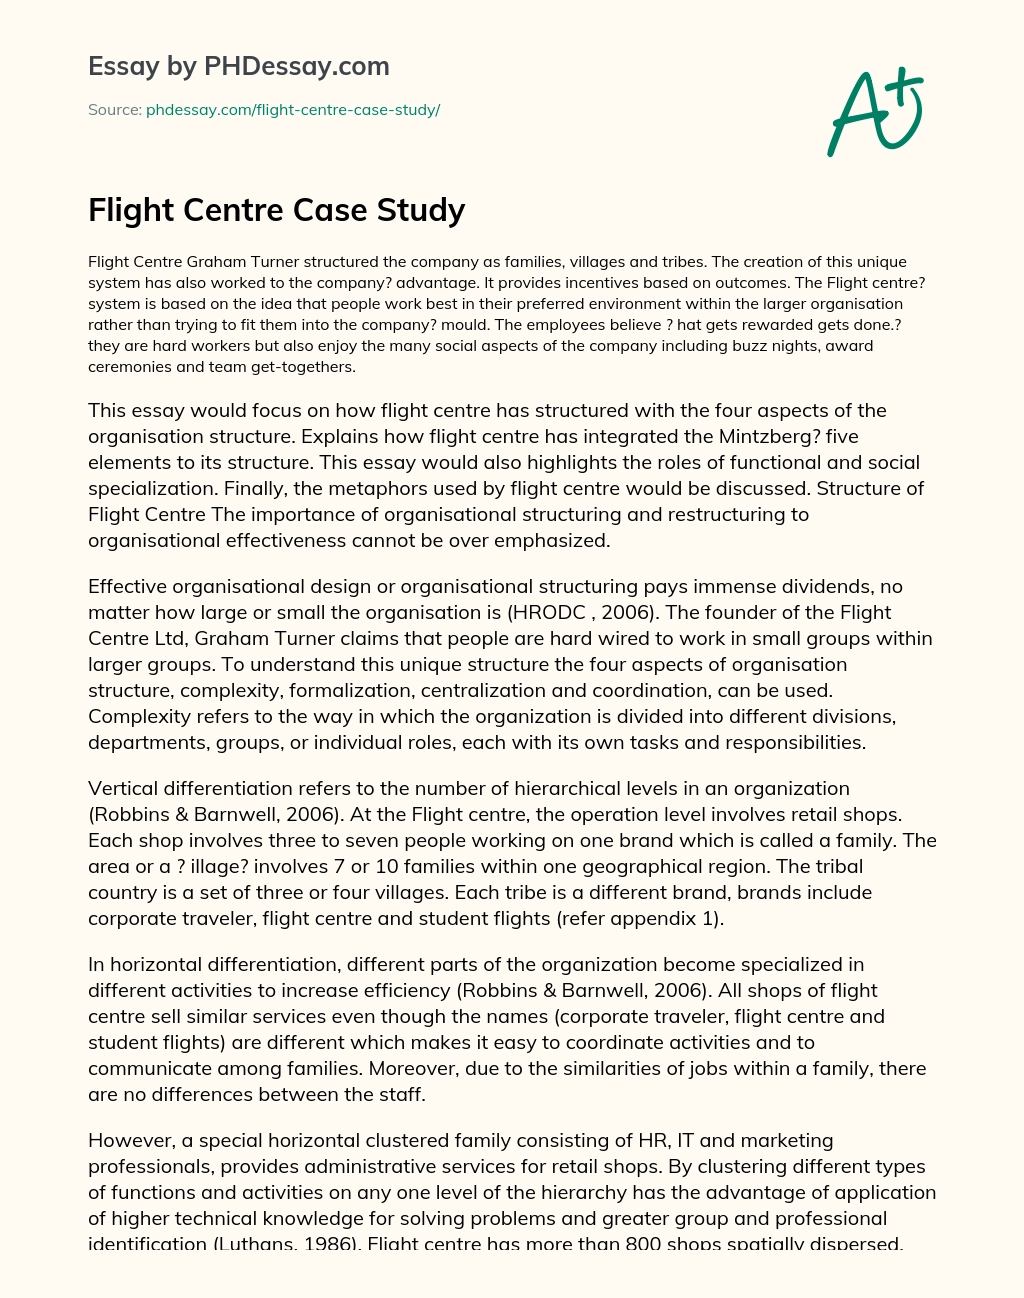 Flight Centre Case Study essay